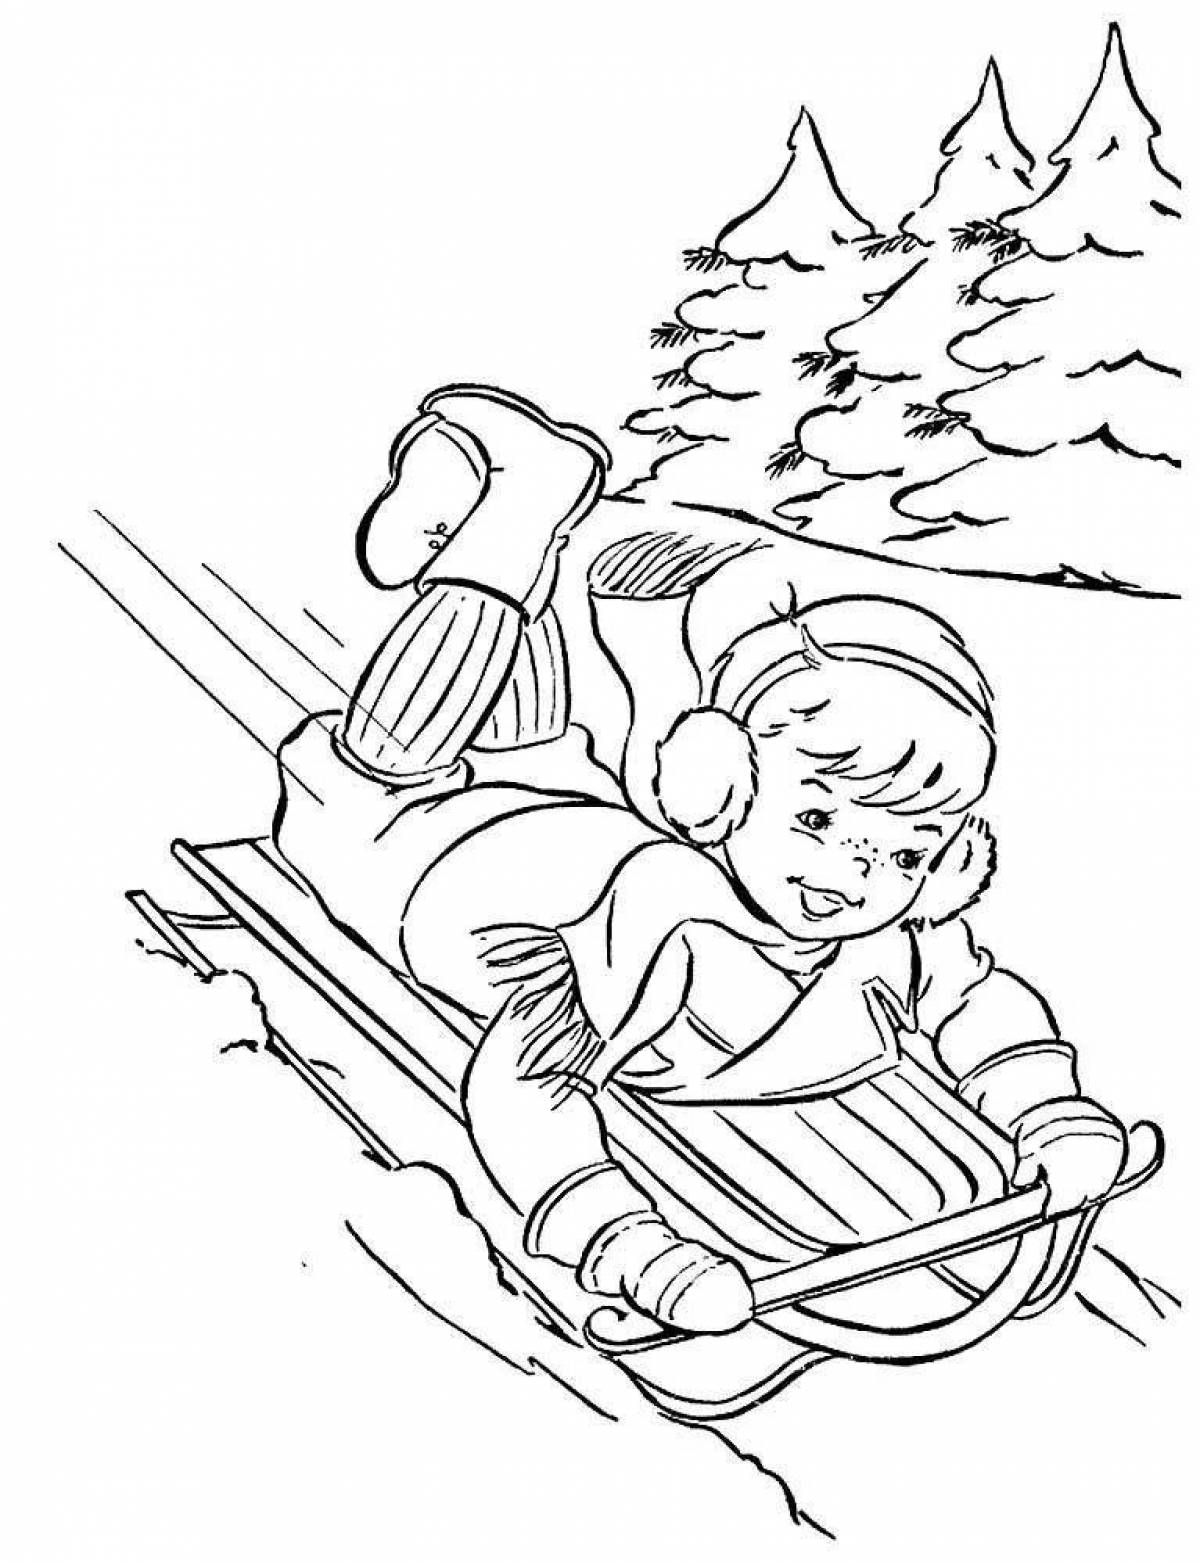 Children sledging #7